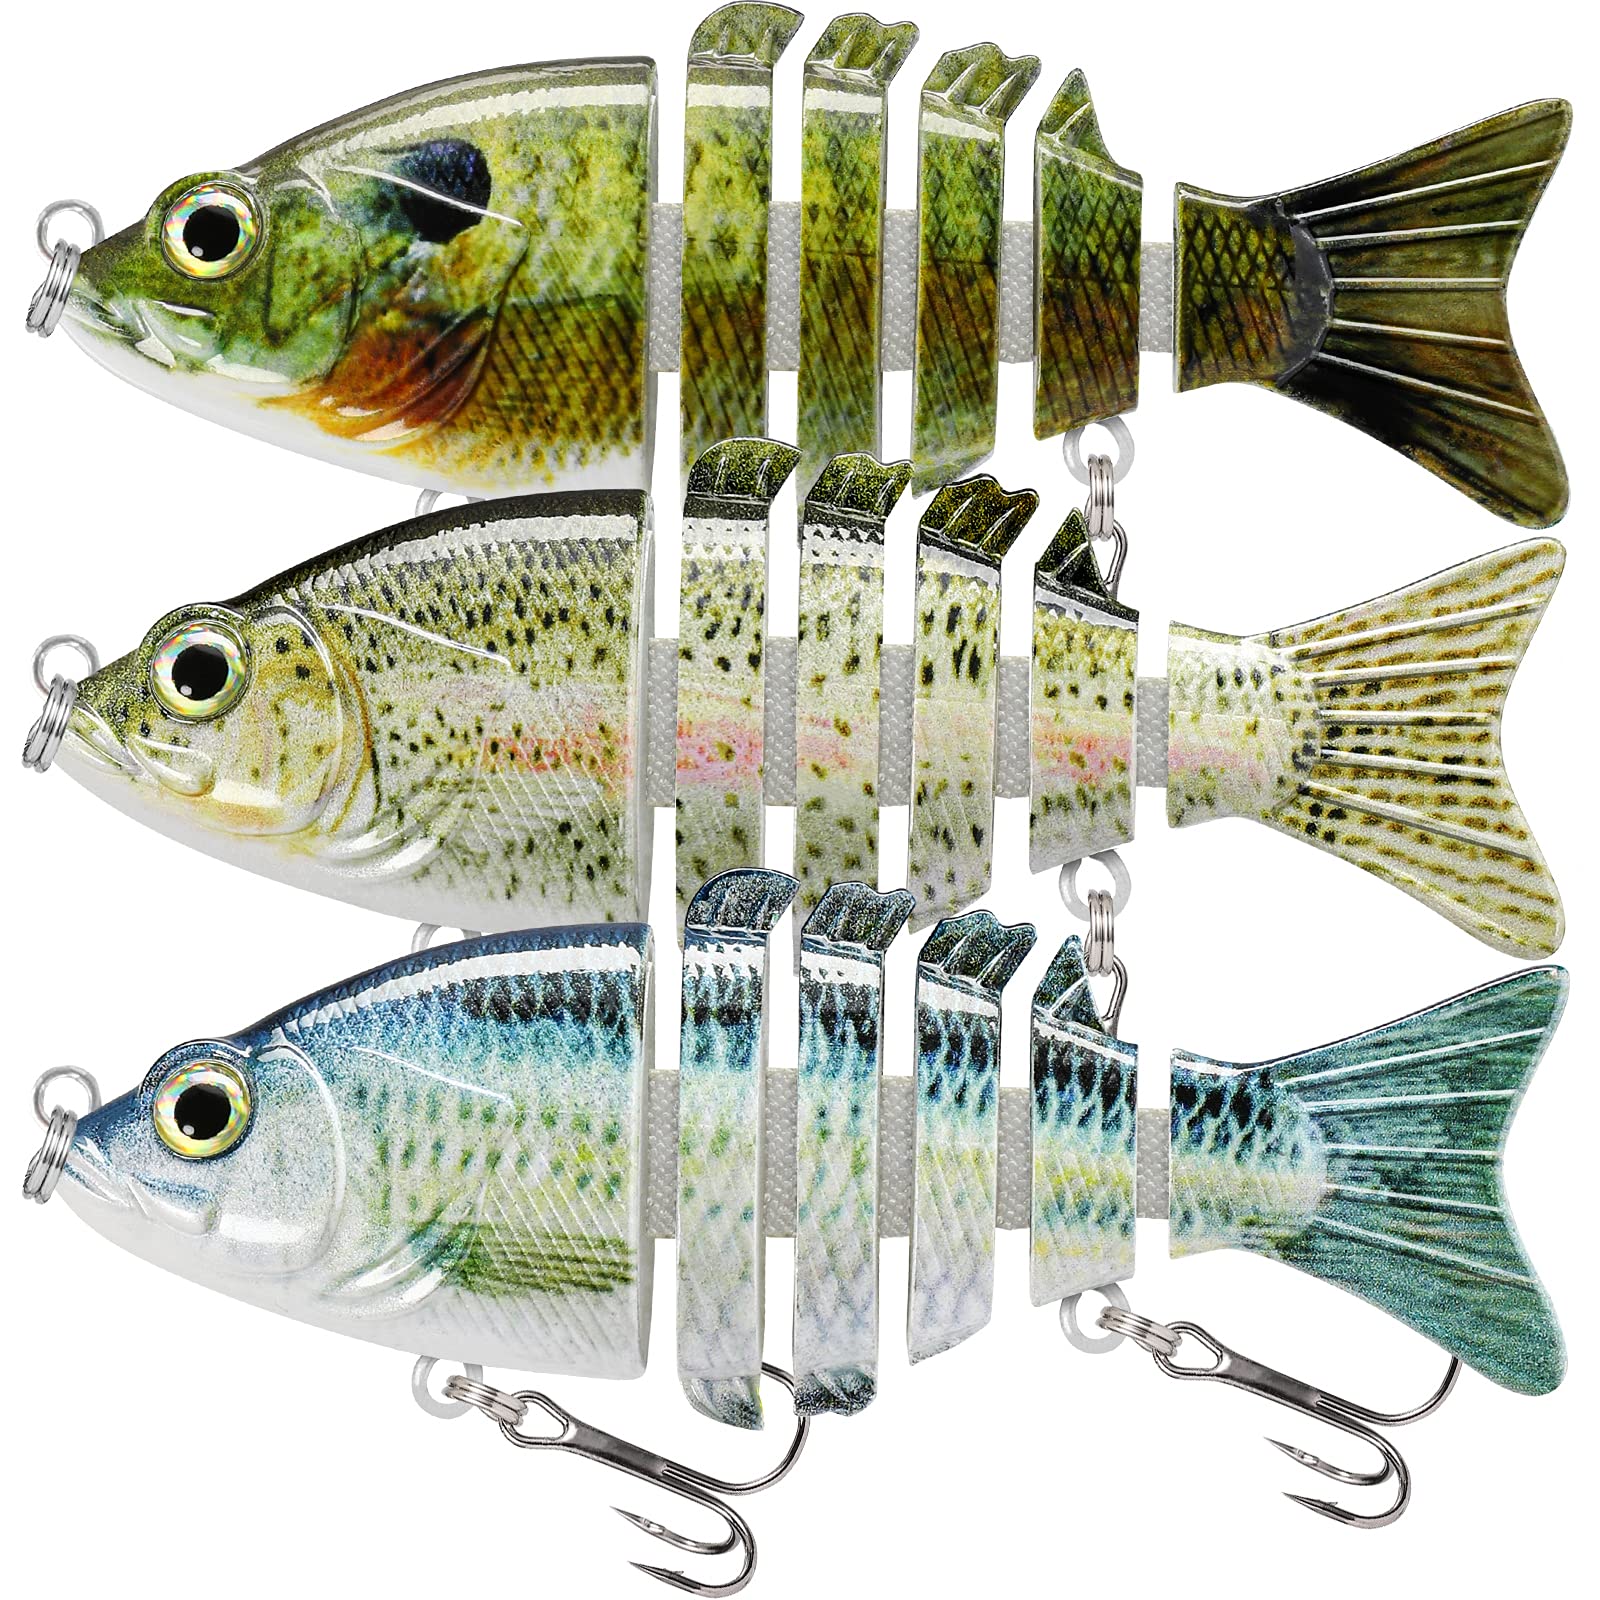 Wifreo 30/120pcs Fish Eye Fishing Beads Carolina Taxes Rigs Fishing Lures  Fly Tying Material DIY Bass Tackle Soft Fishing Lure